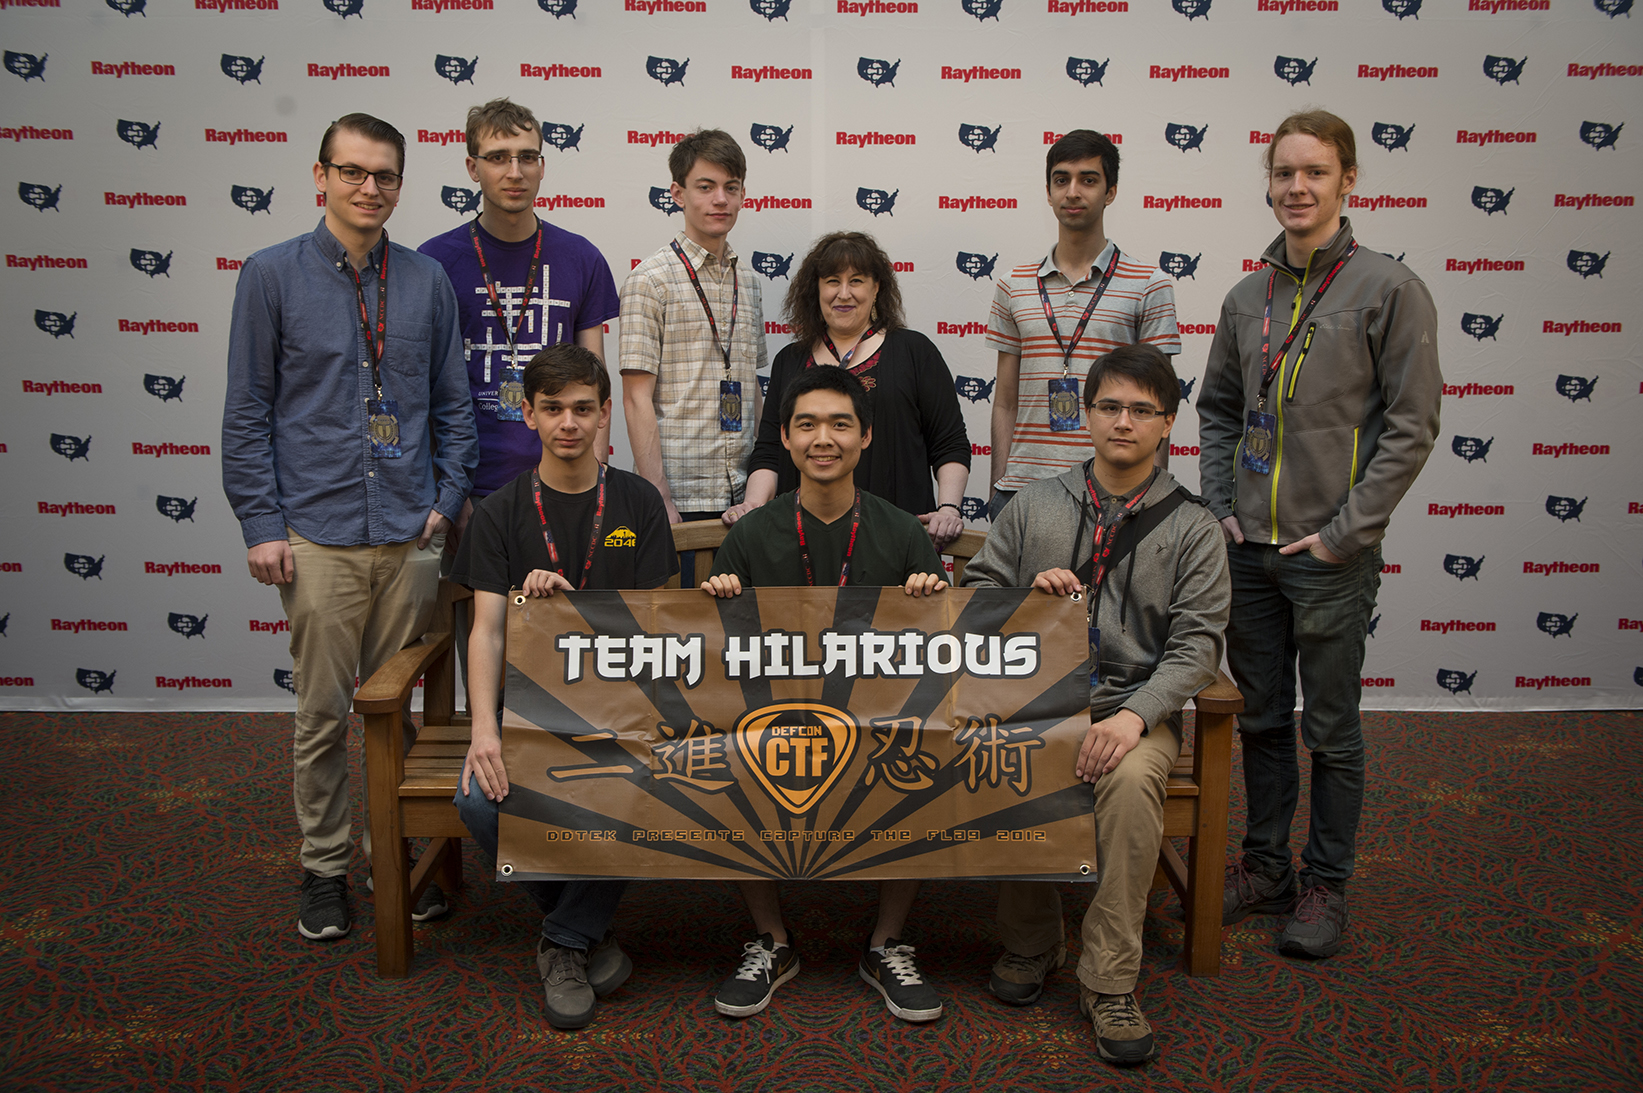 University of Washington "Team Hillarious" team in 2017